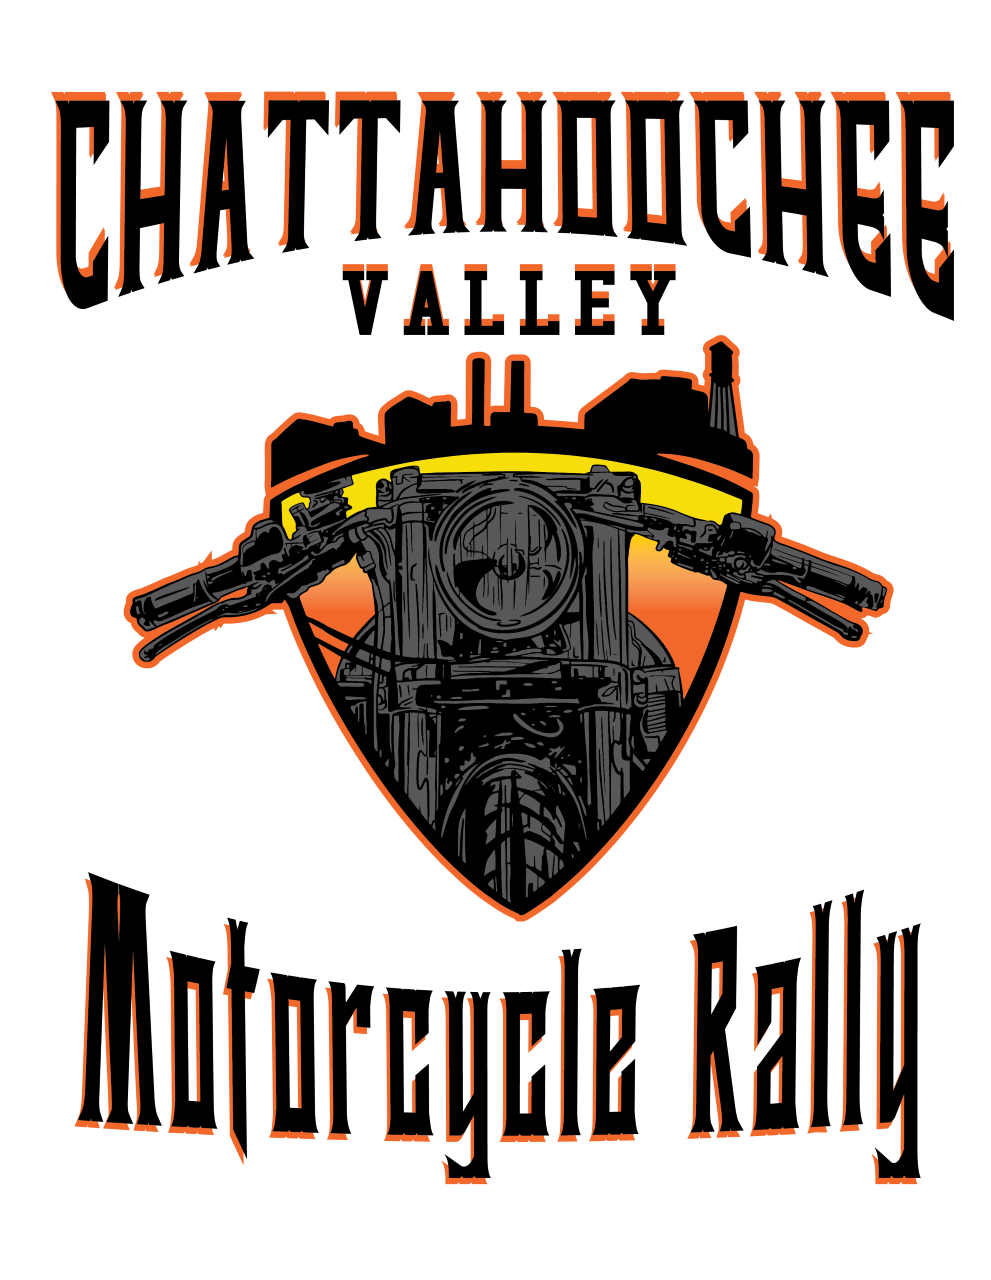 Chattahoochee Valley Motorcycle Rally logo